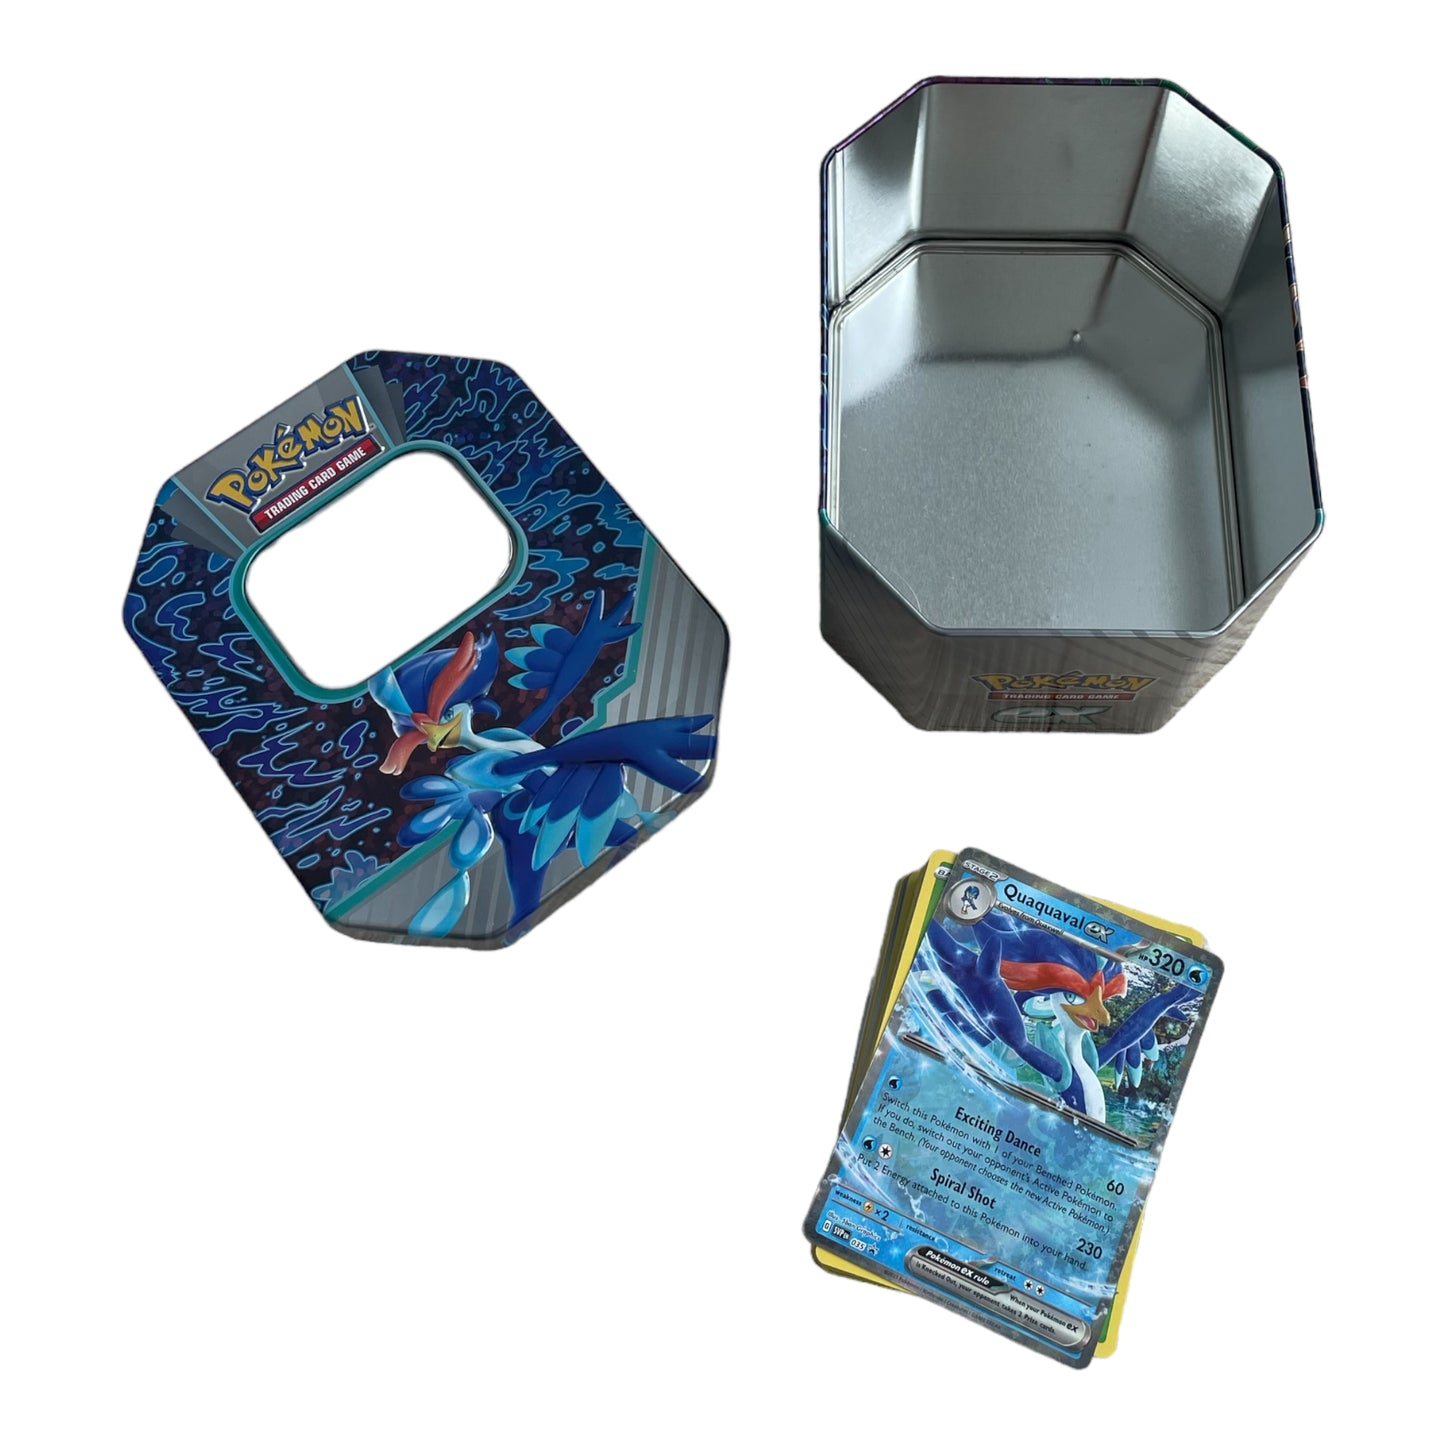 Pokémon - Quaquaval Metal Box with 100 cards - Trading card game